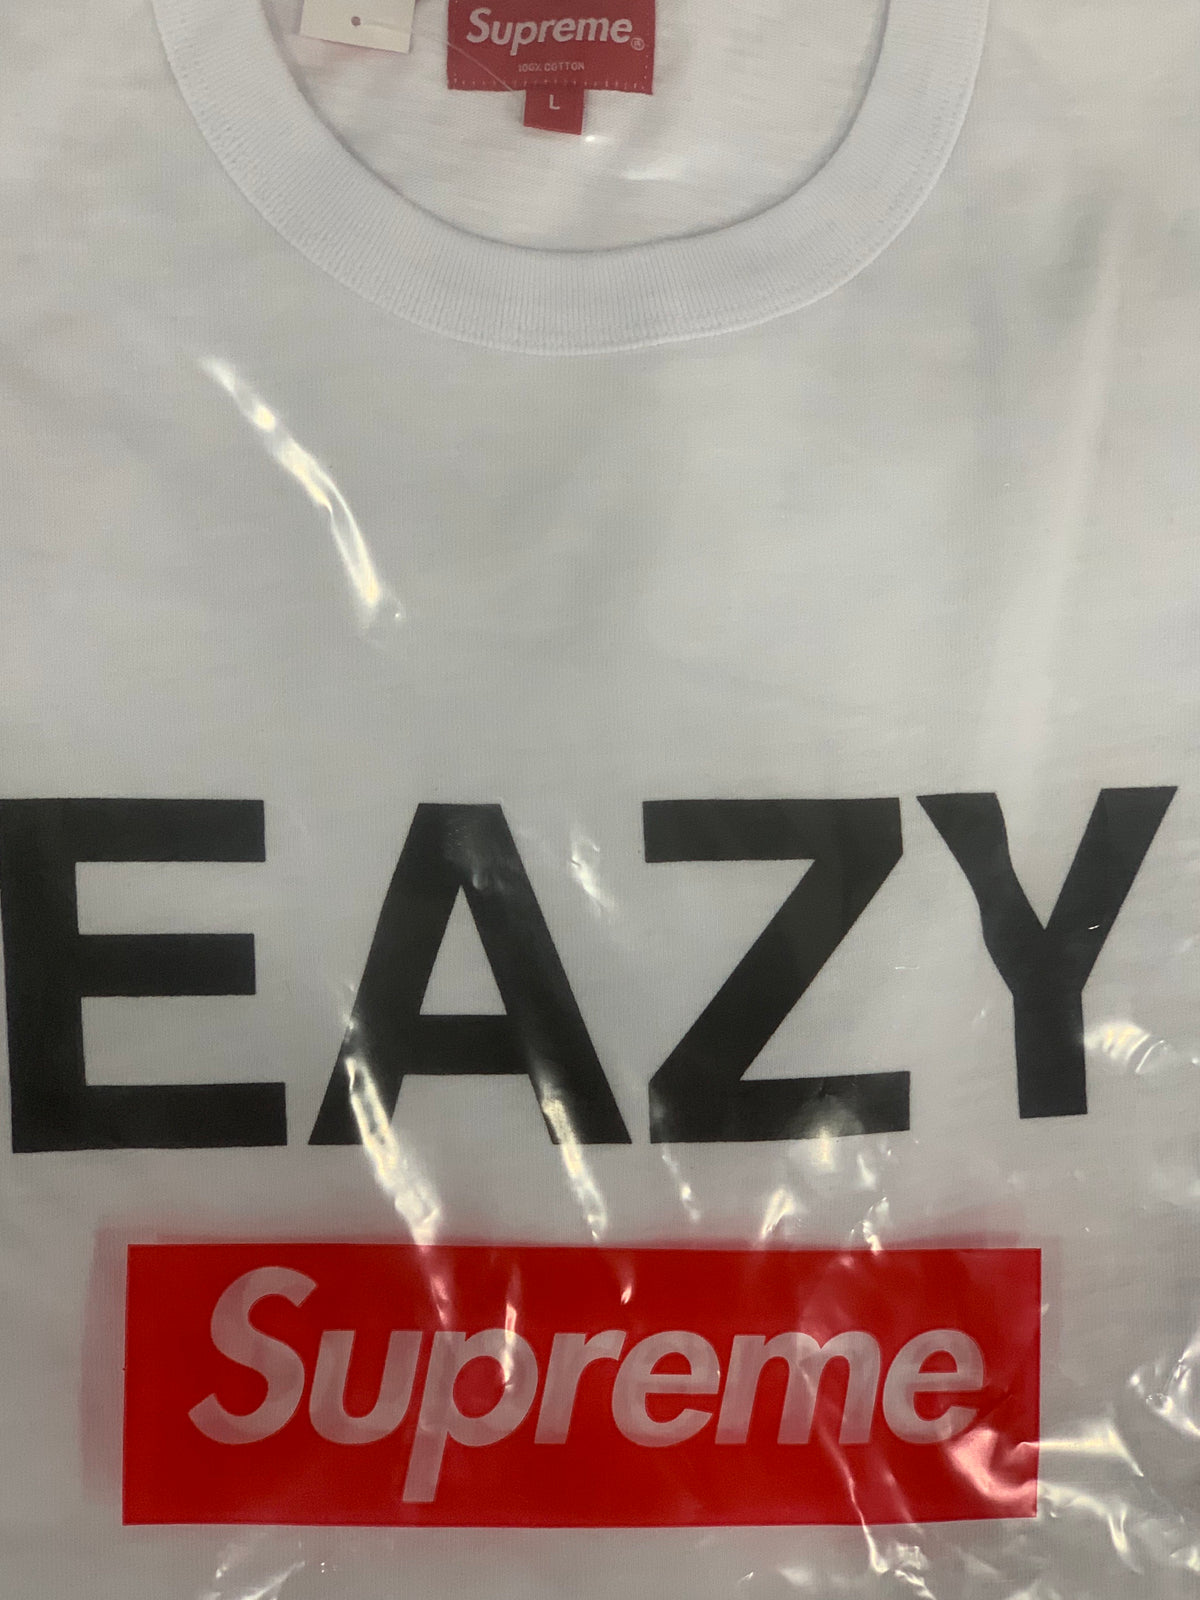 Supreme Eazy Top